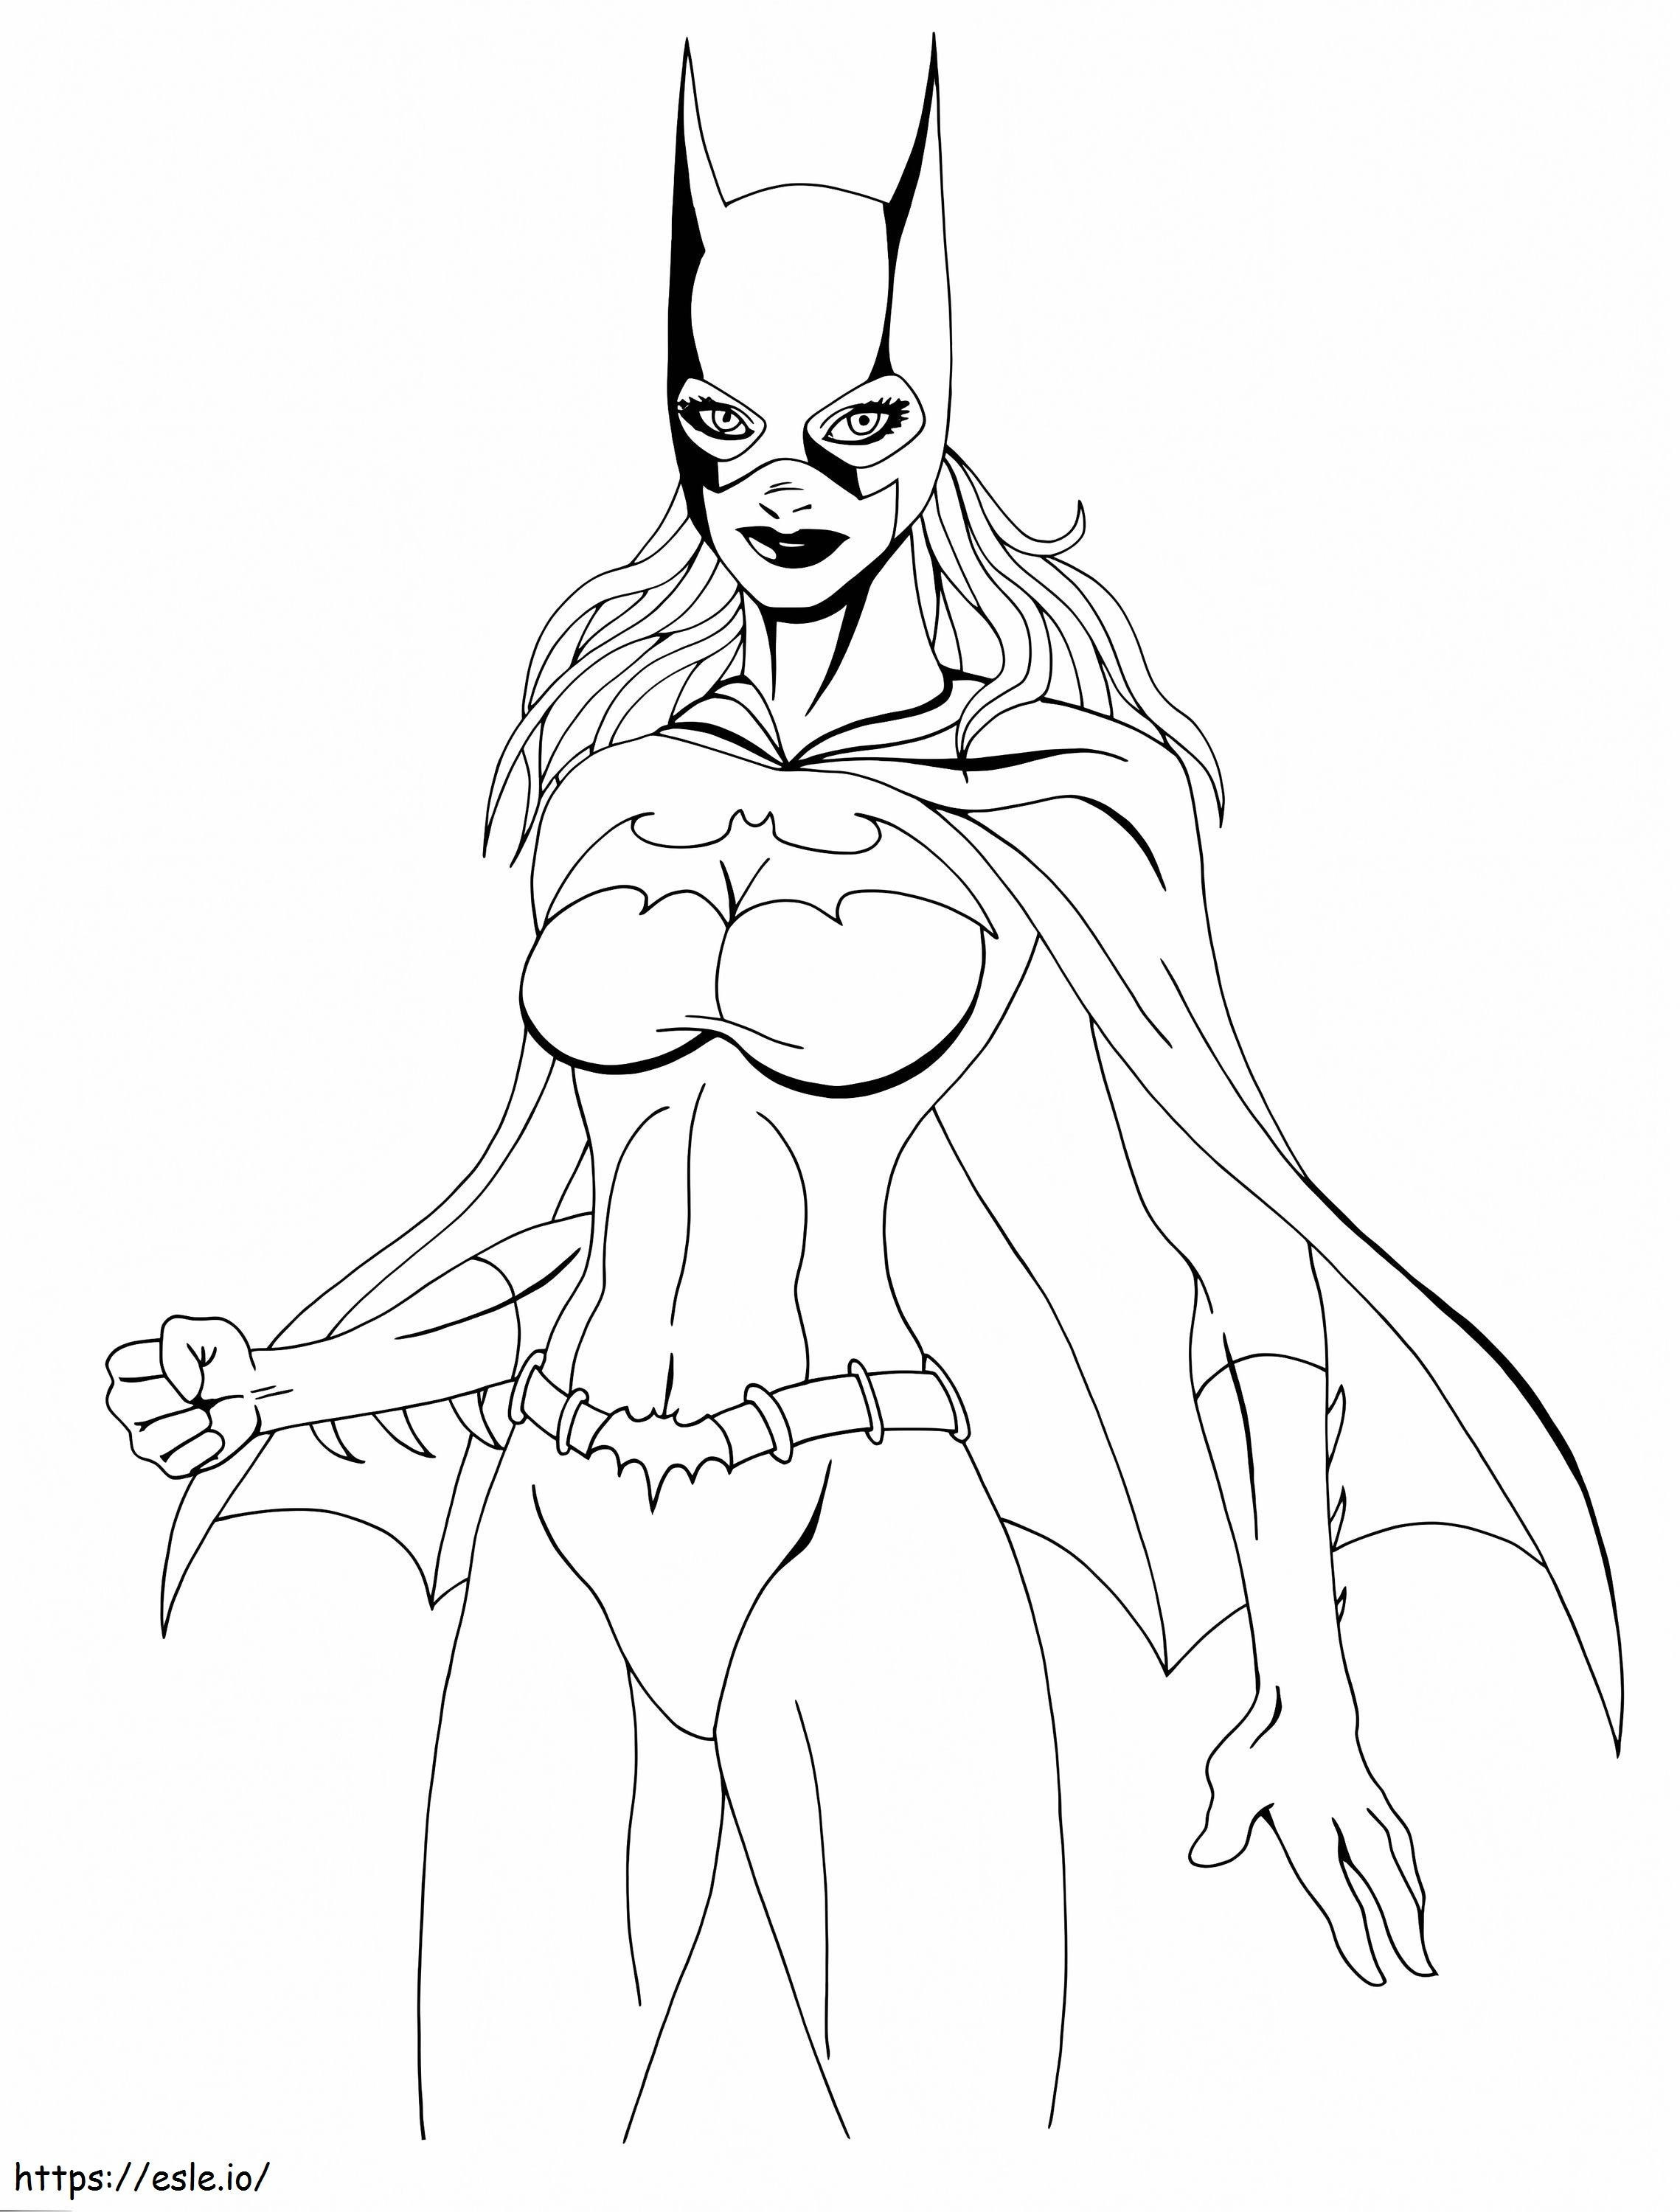 Genial Batgirl coloring page